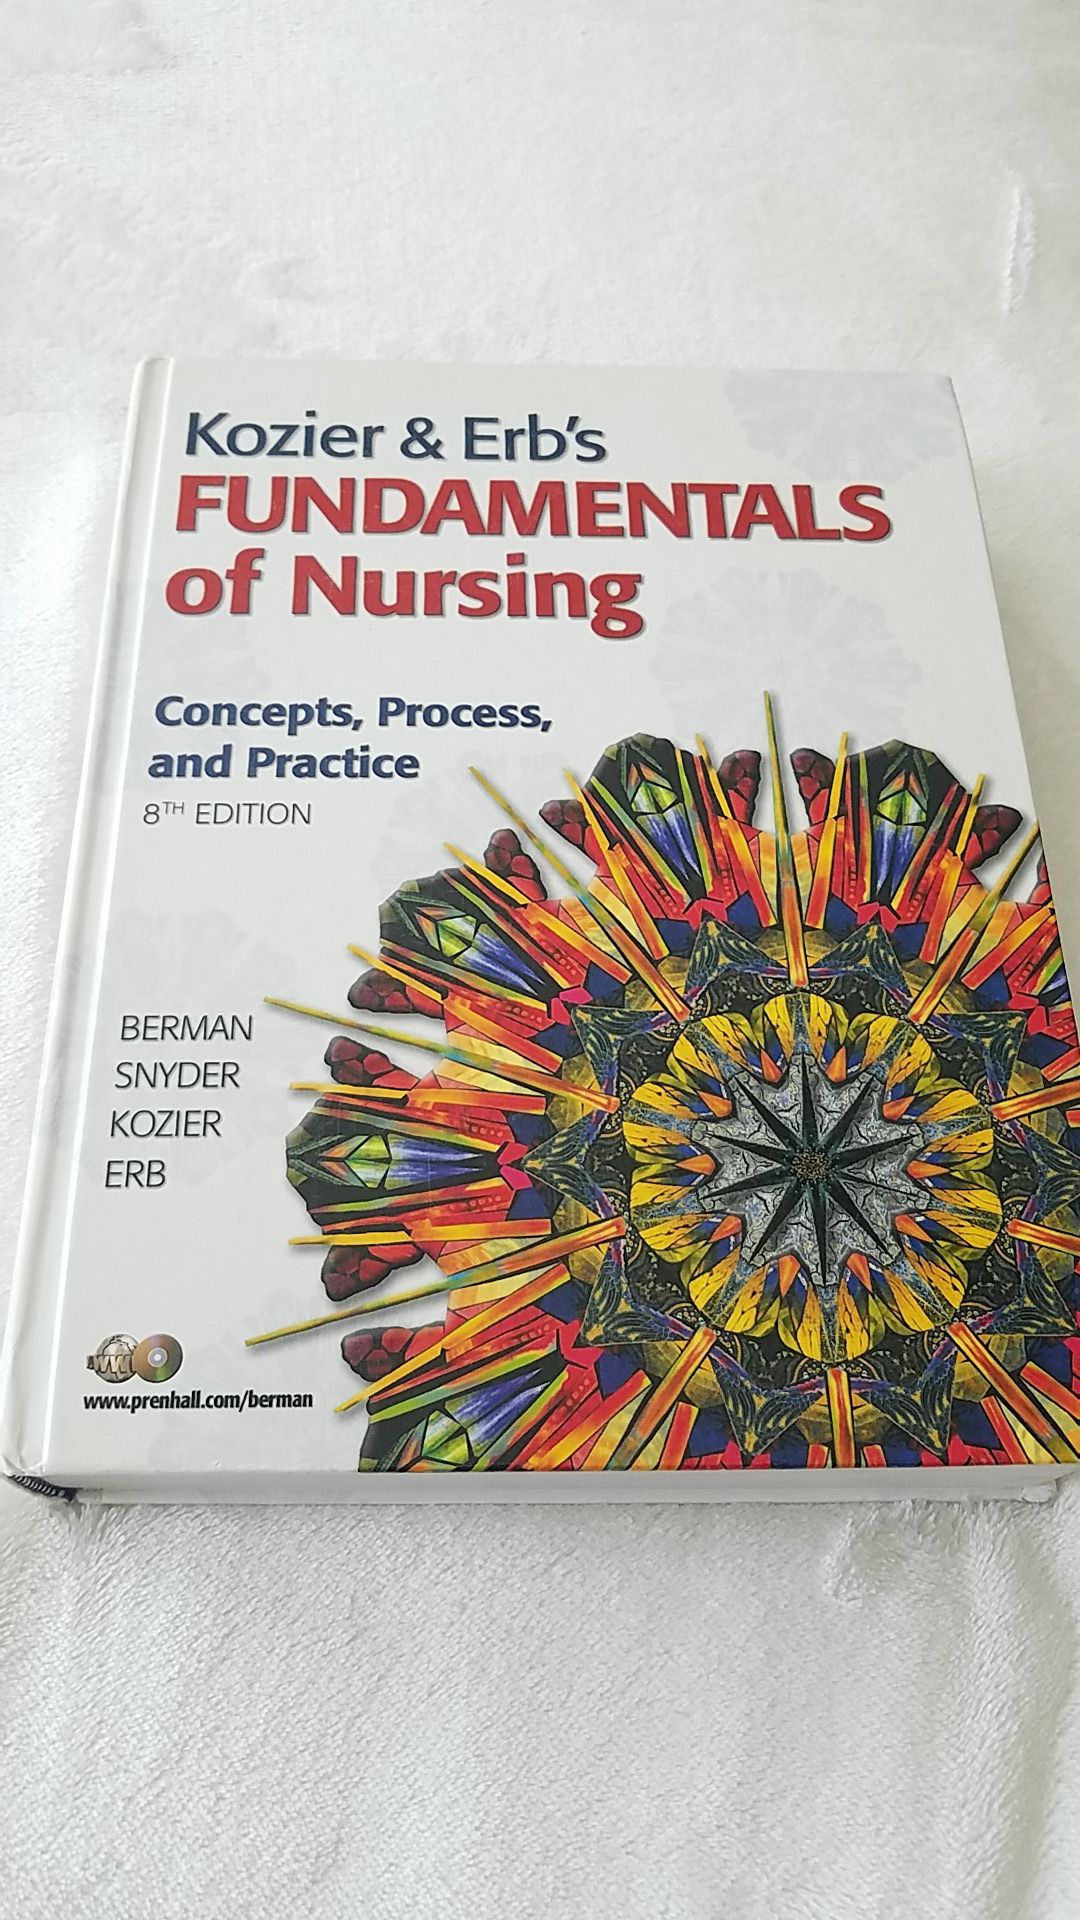 Kozier & Erb's Fundamentals of Nursing 8th Edition